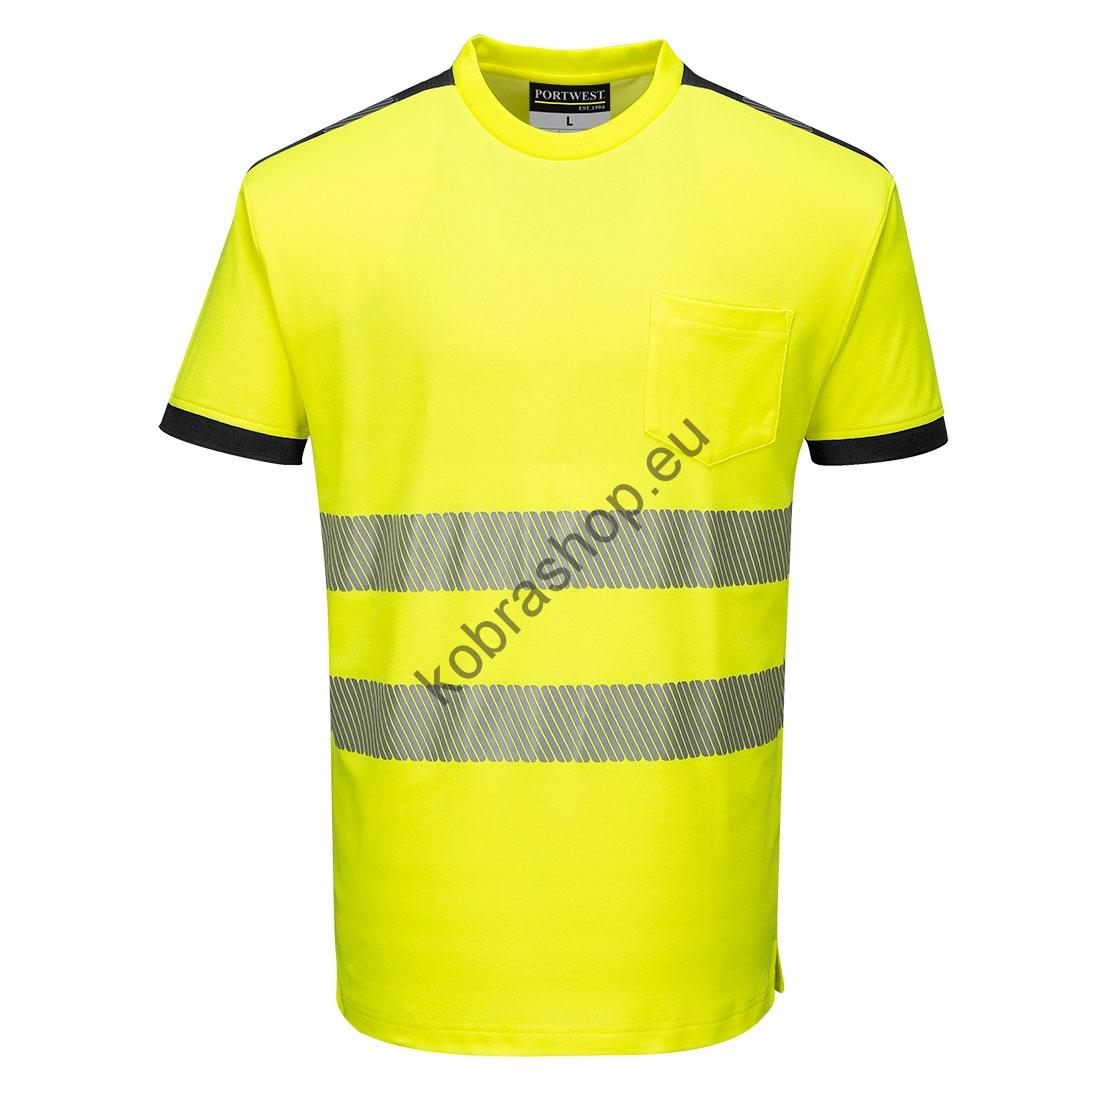 HI-VIS tričko PW3 žlté